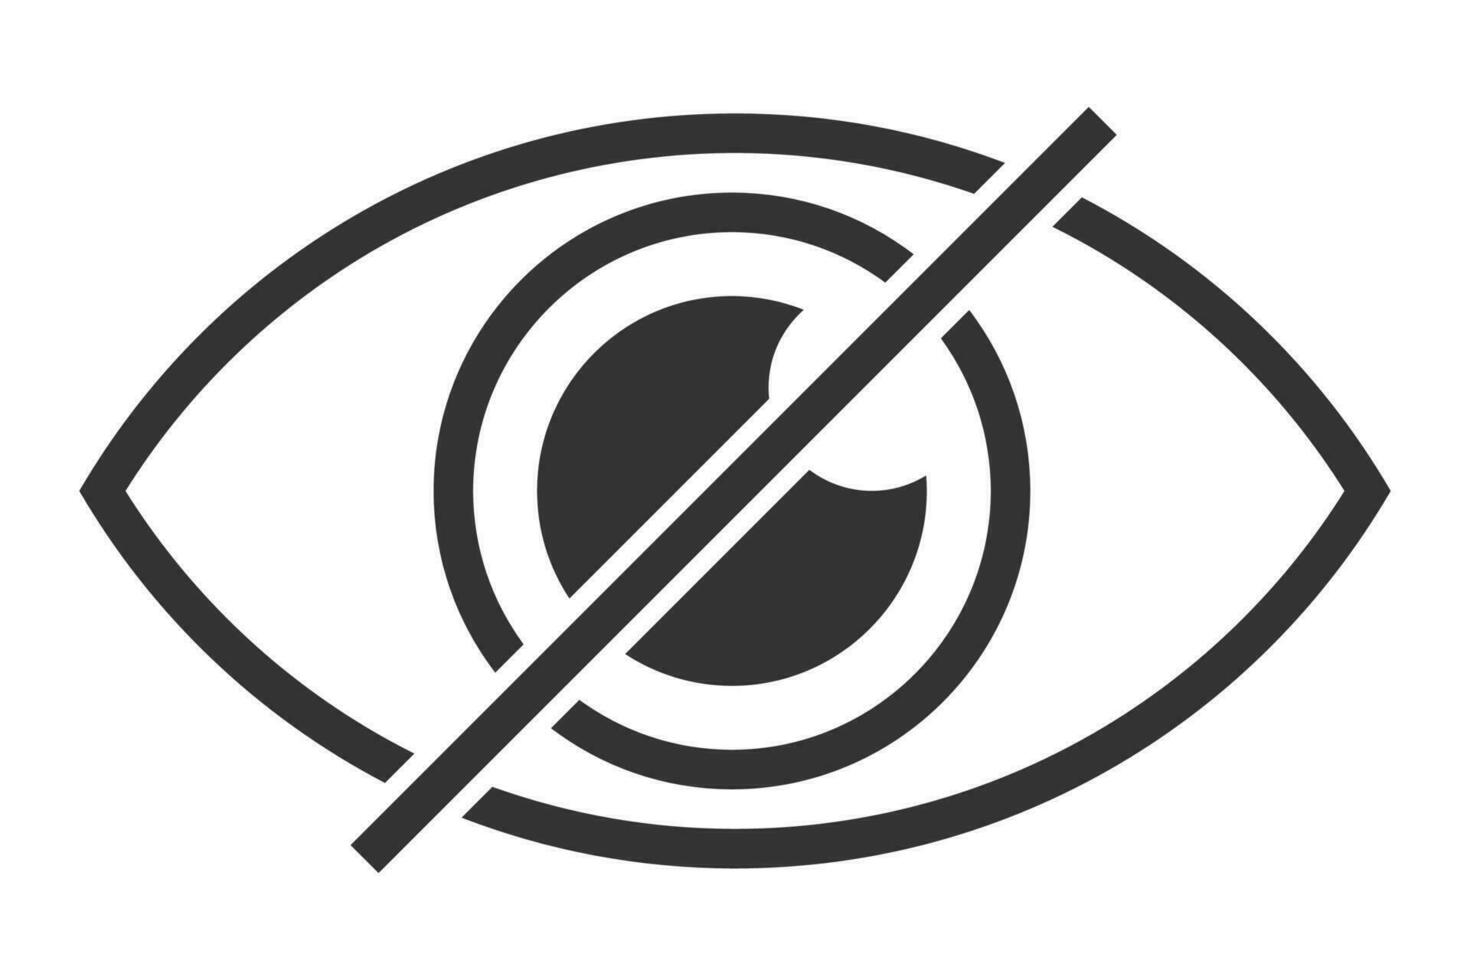 Do not look, Eye icon. Hidden human zore organ symbol. Sign forbit sigth eyeball icon. vector